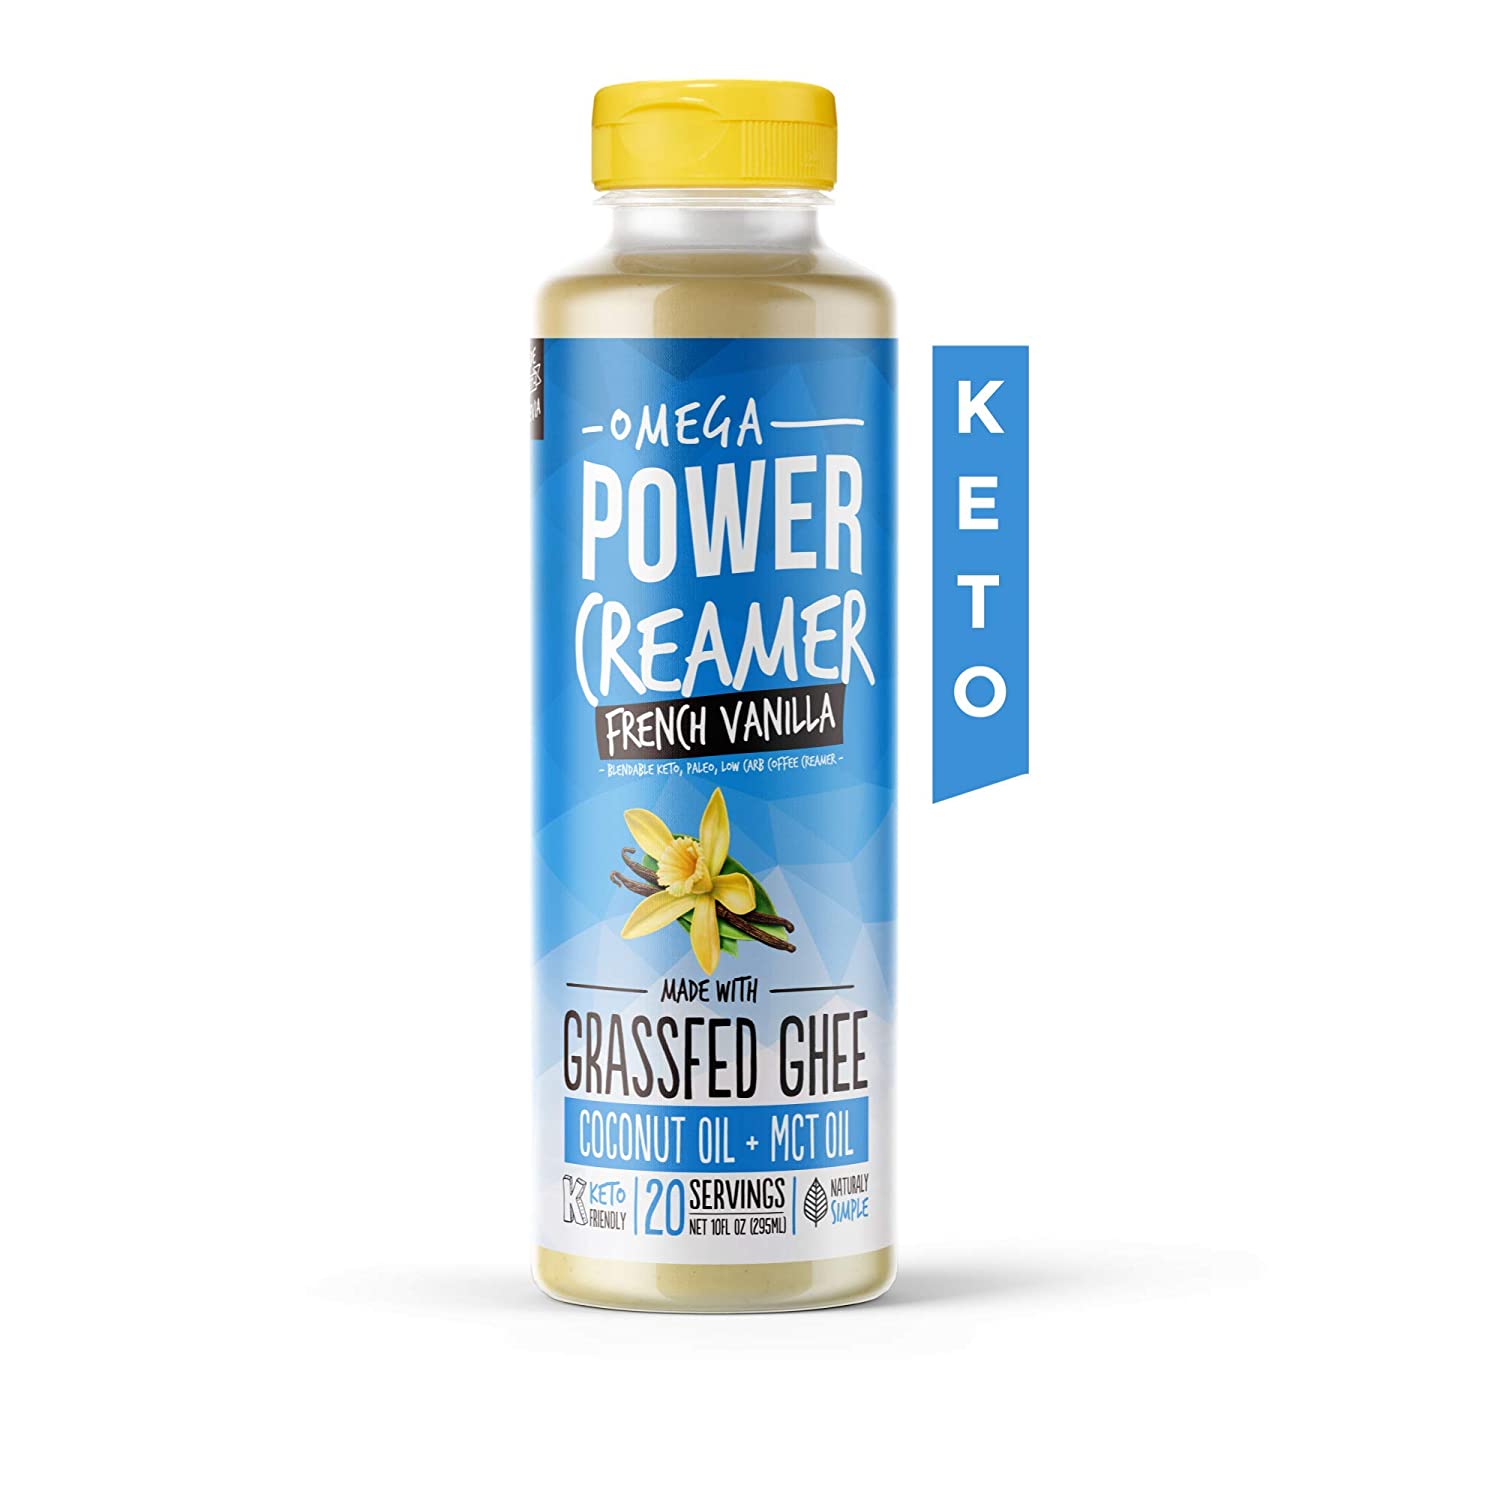 Omega PowerCreamer French Vanilla Keto Coffee Creamer